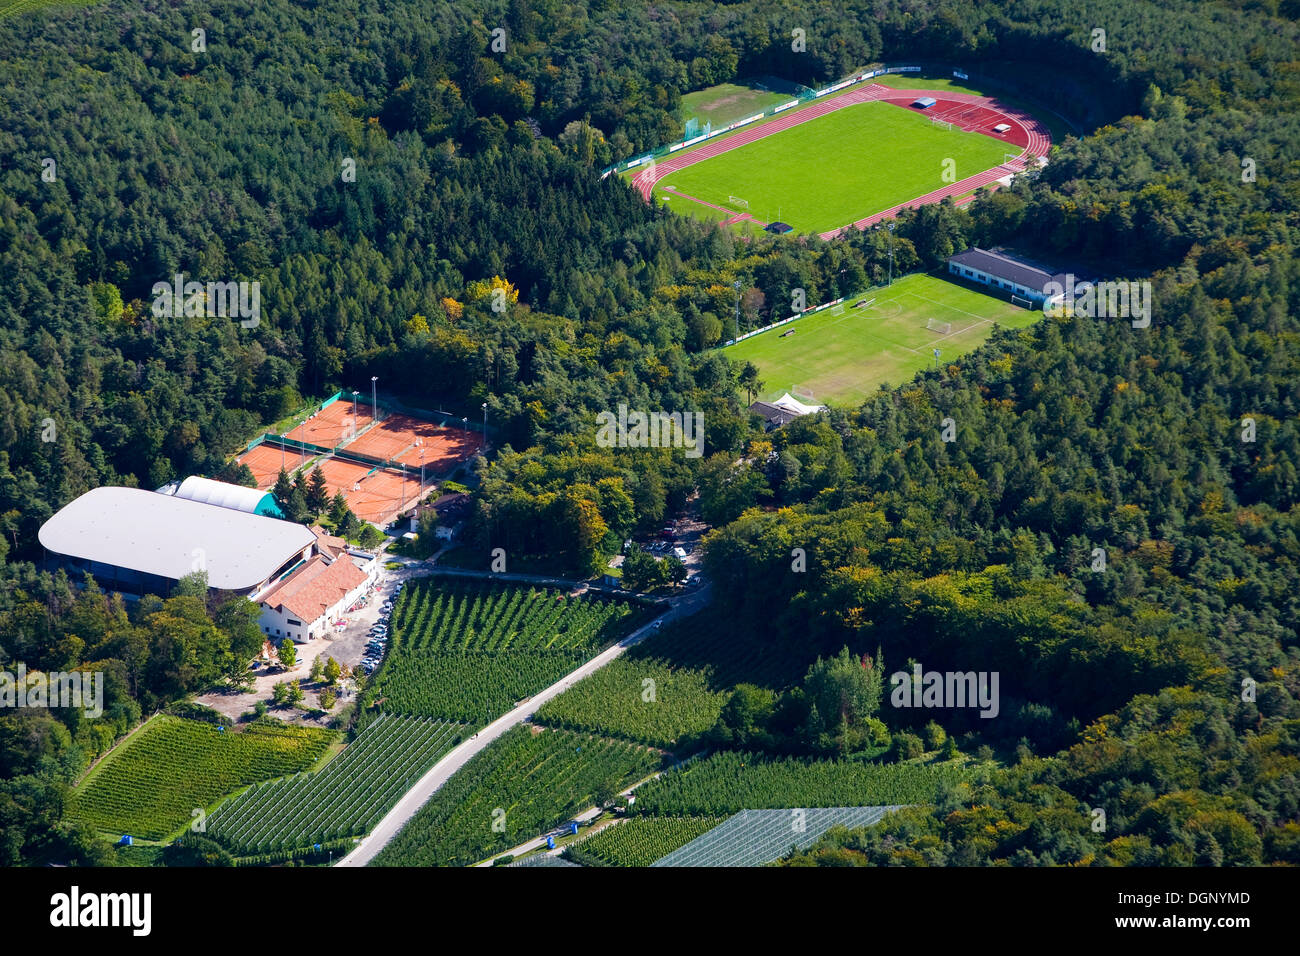 Les terrains de sports, Caldaro, province de Bolzano-Bozen, Italie, Europe Banque D'Images